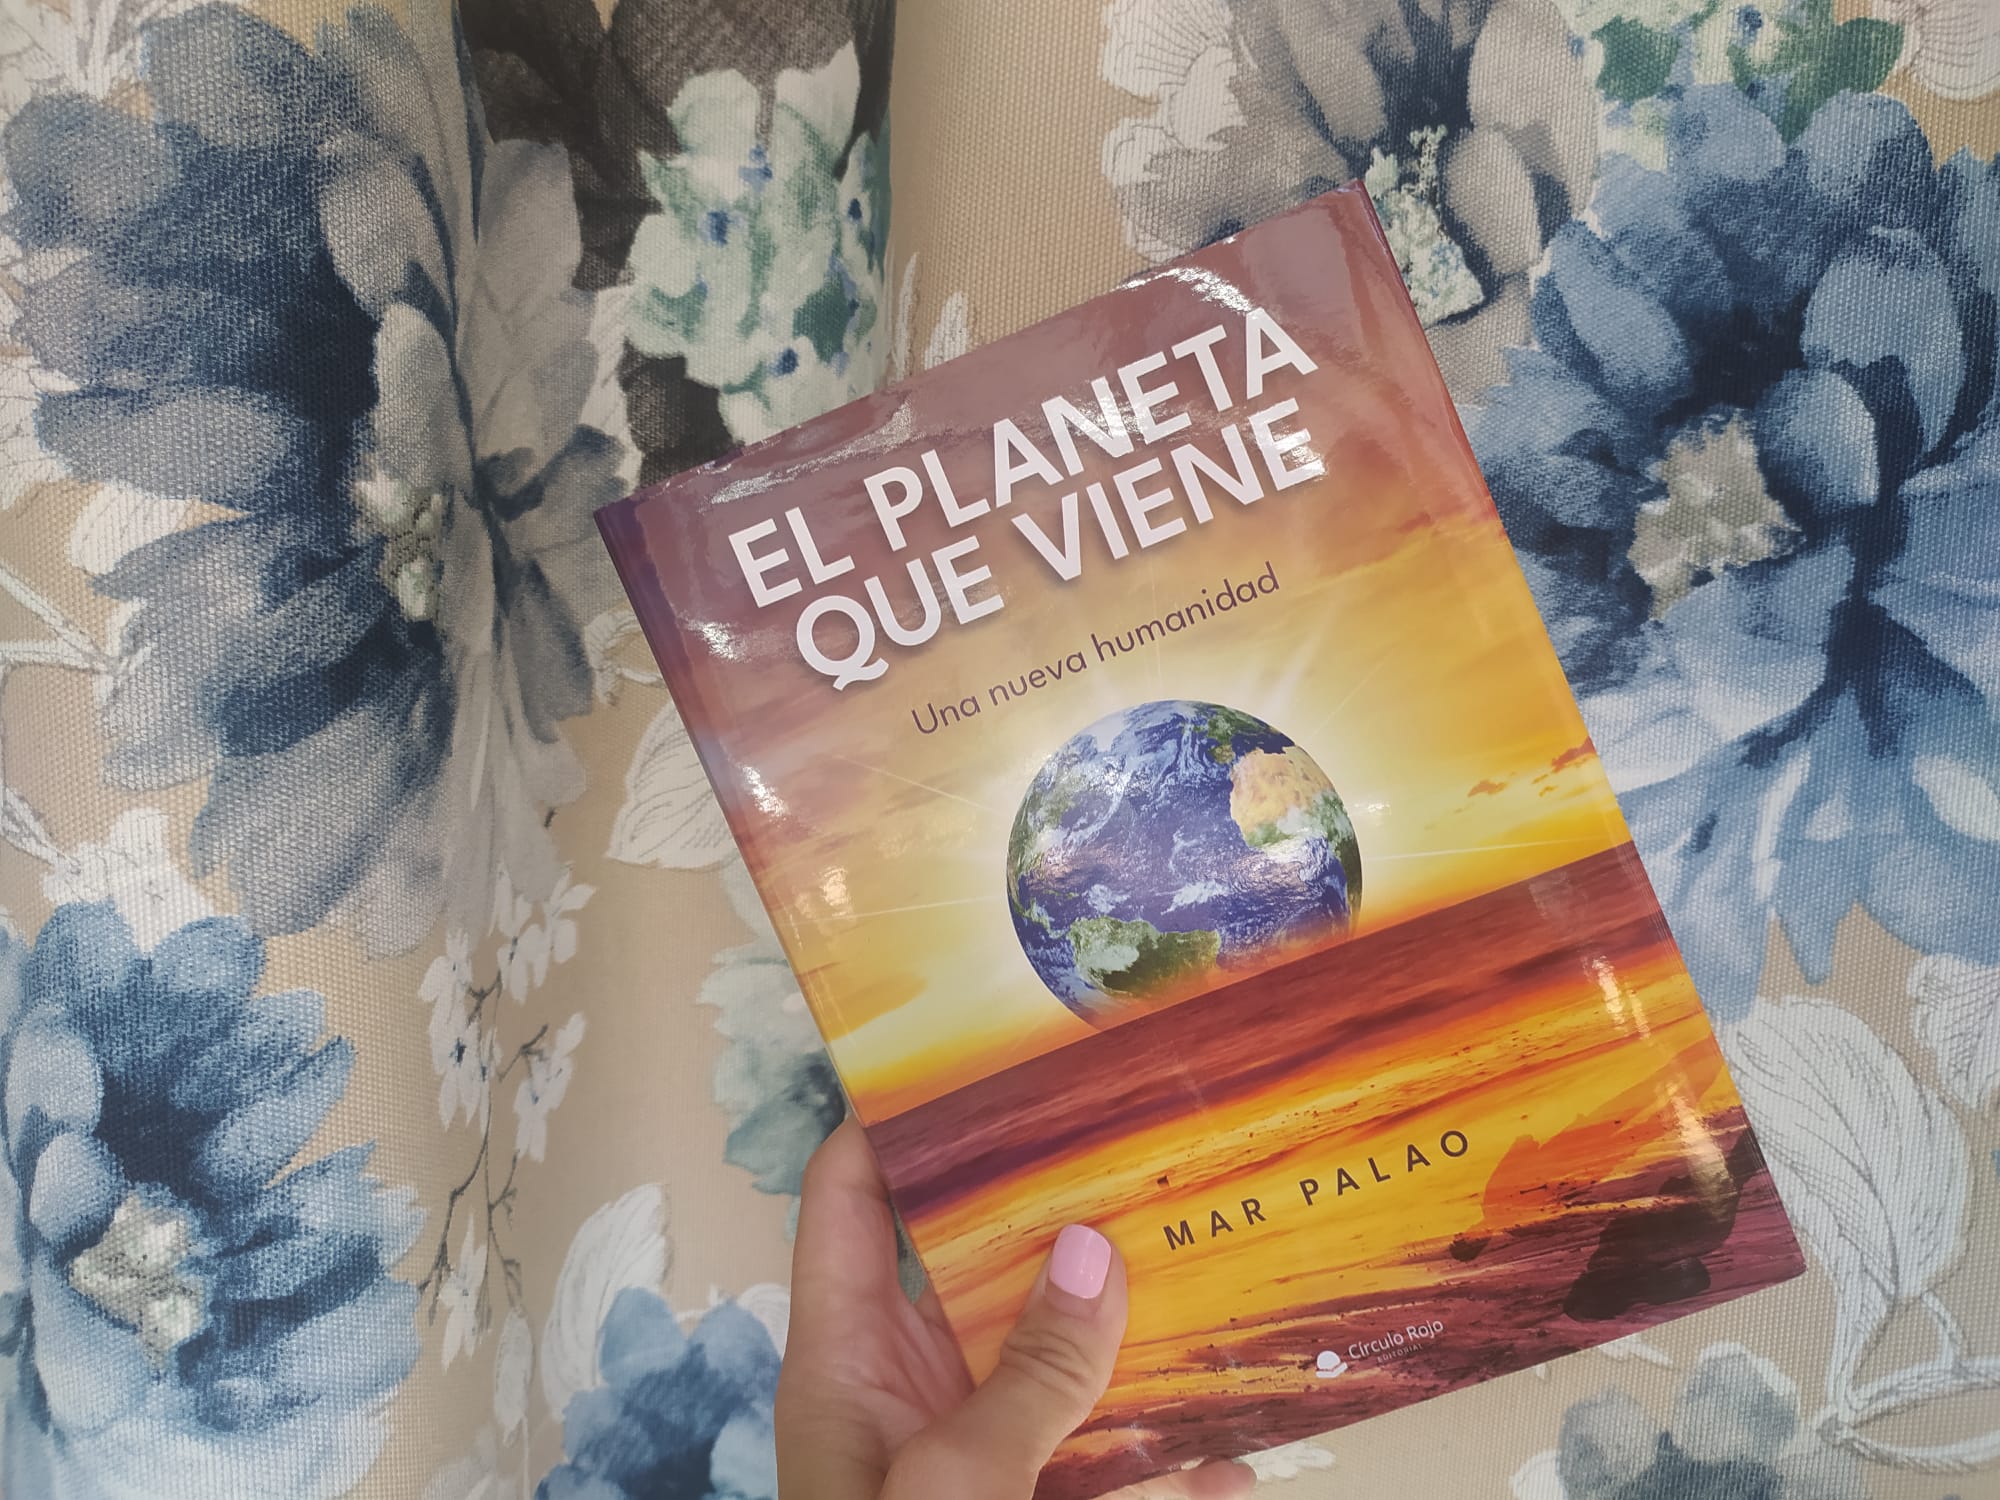 Reseña de “El planeta que viene", de Mar Palao | Por Daniela González